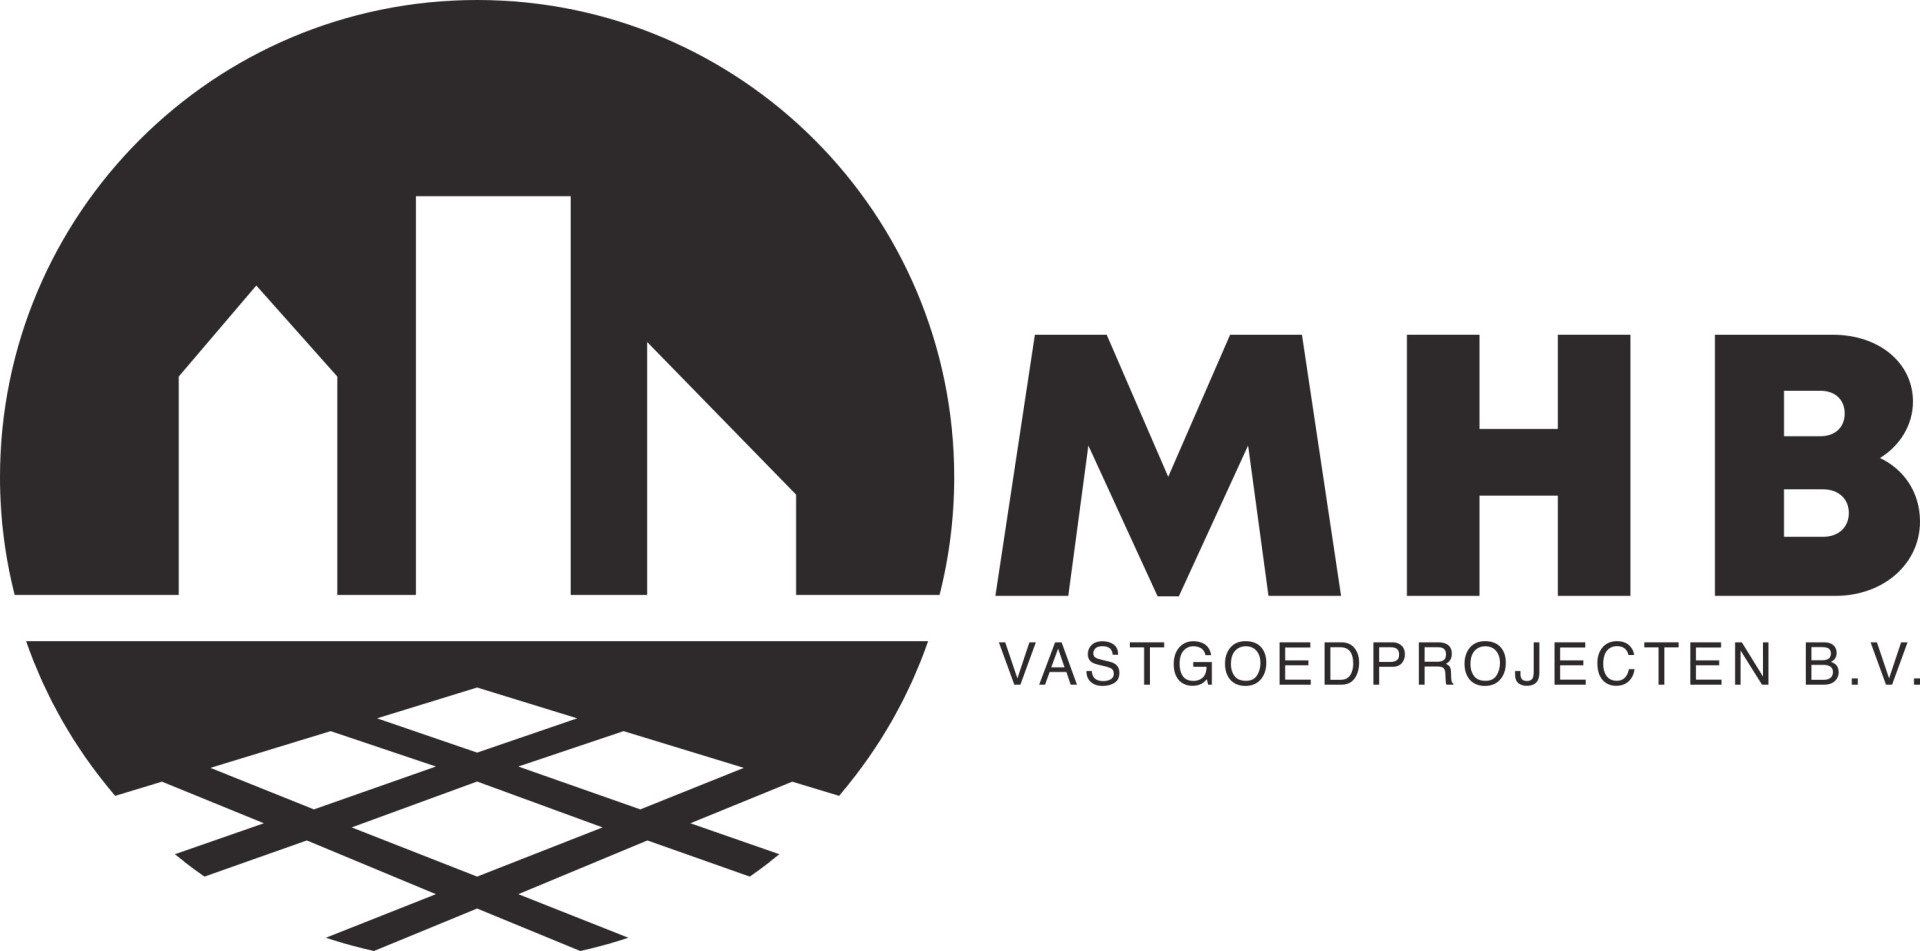 MHB Vastgoedprojecten logo